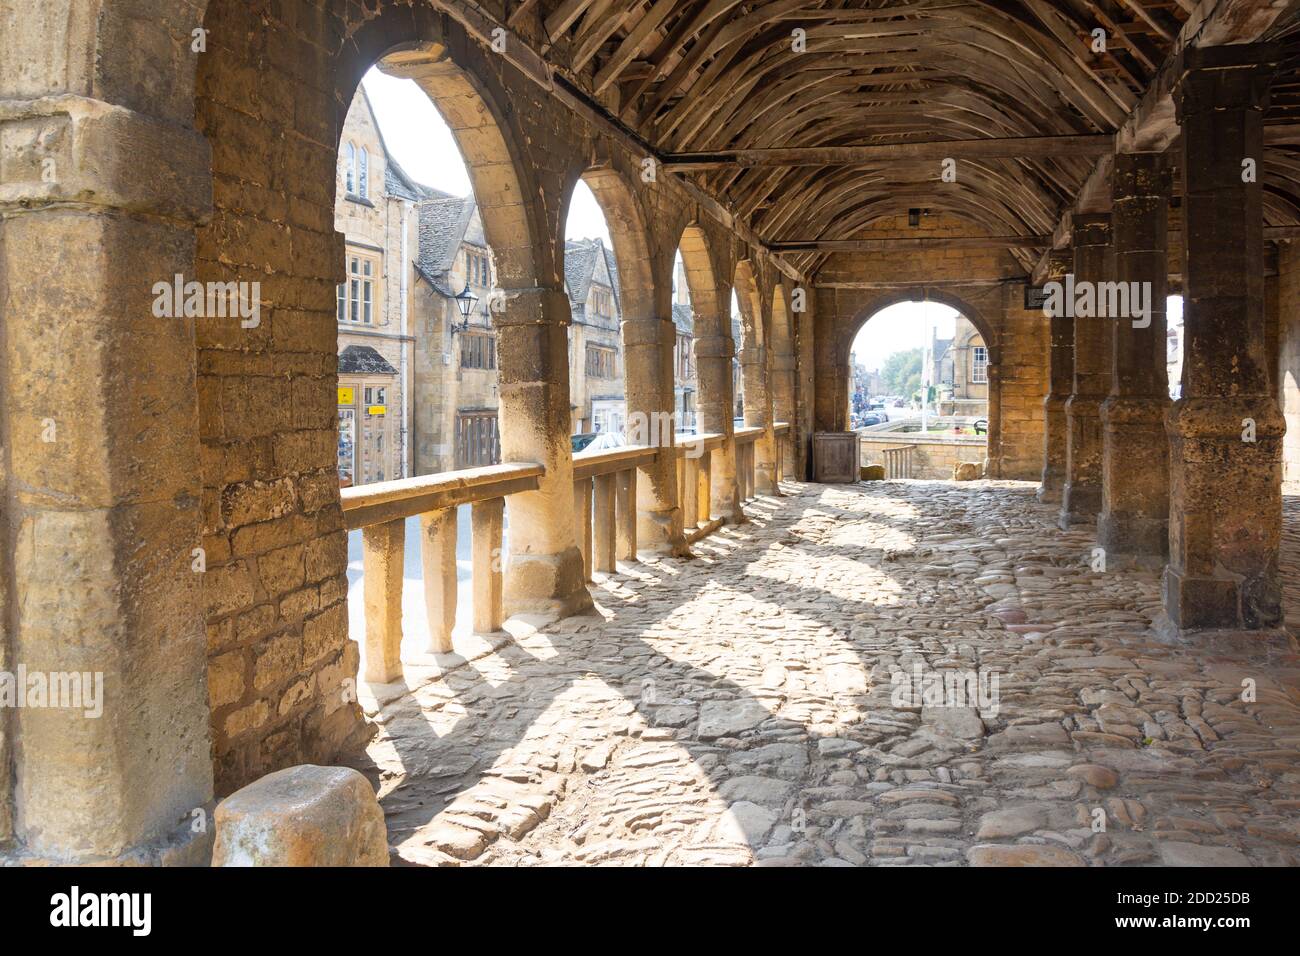 Medieval Market Hall, High Street, Chipping Campden, Gloucestershire, England, Großbritannien Stockfoto